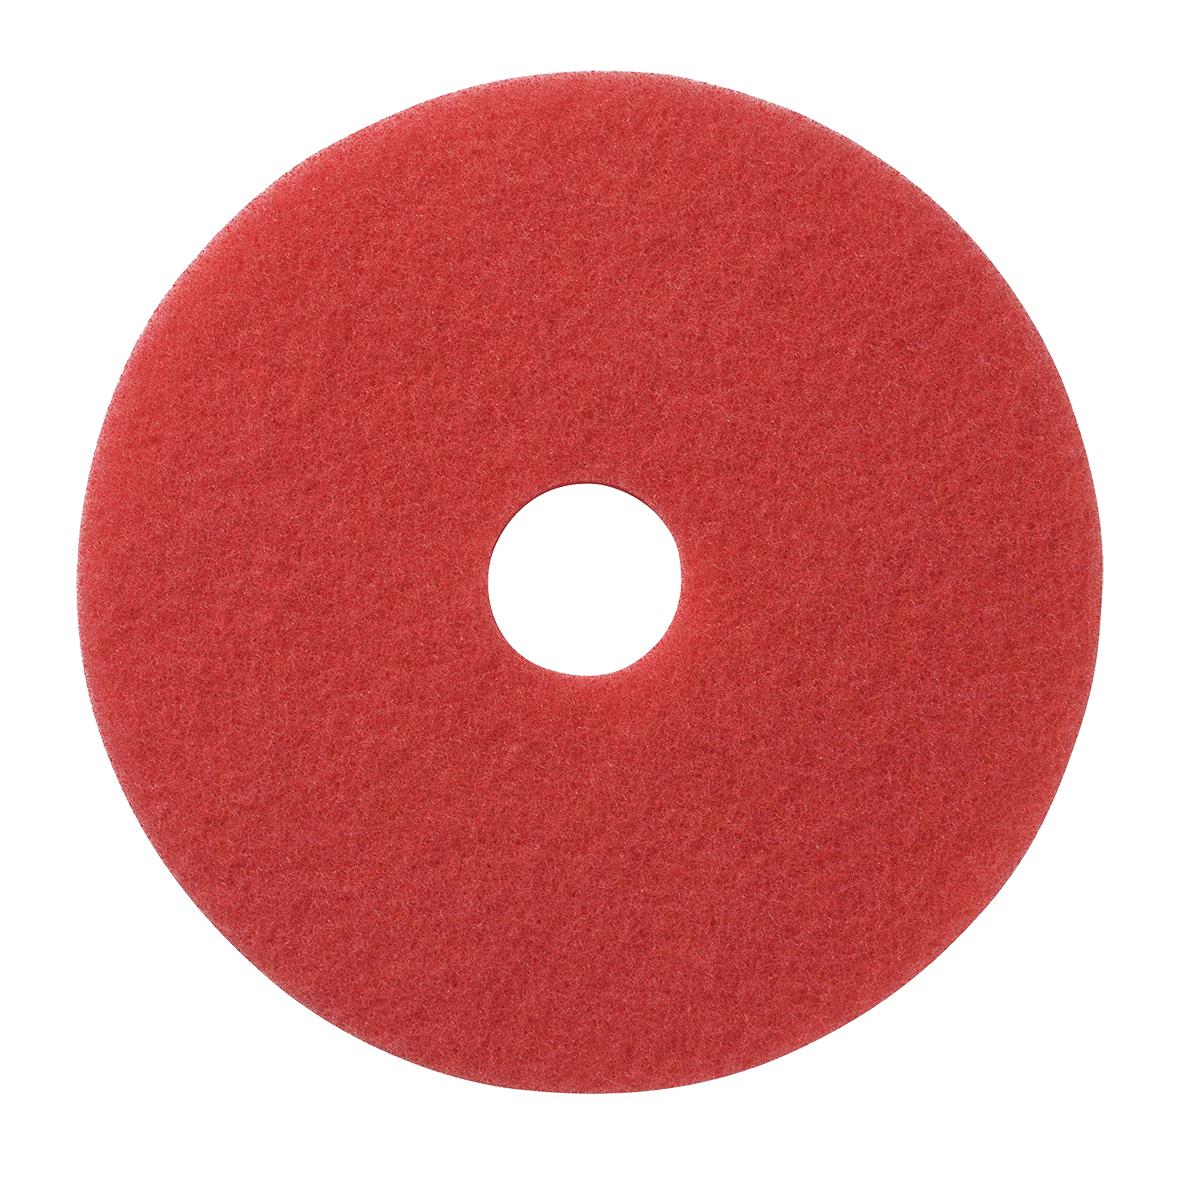 Polerrondell Clean Part standard röd 17"/432 mm